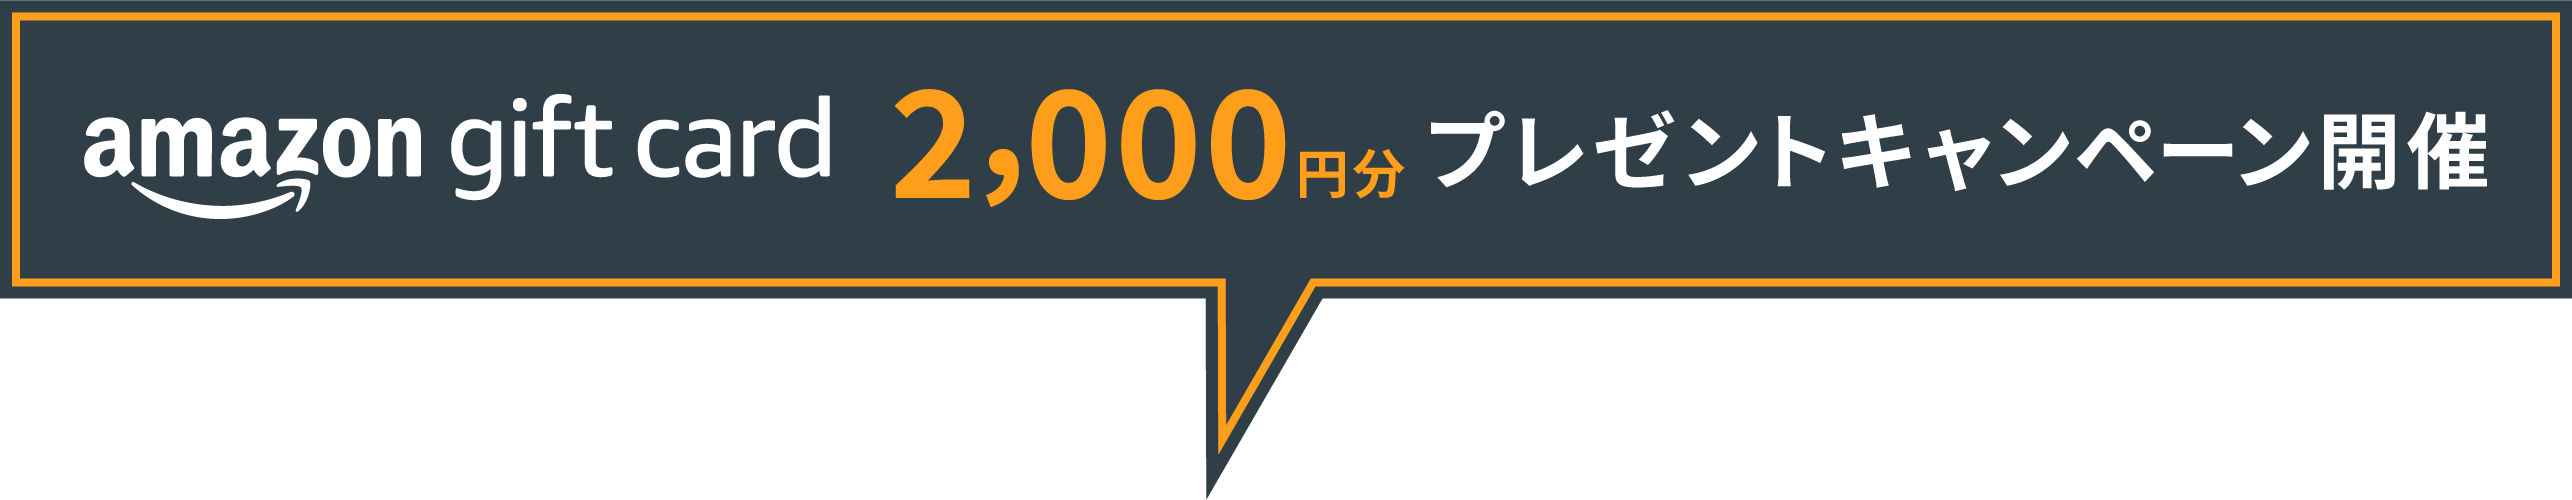 Amazonギフト券5,000円分プレゼントキャンペーン開催